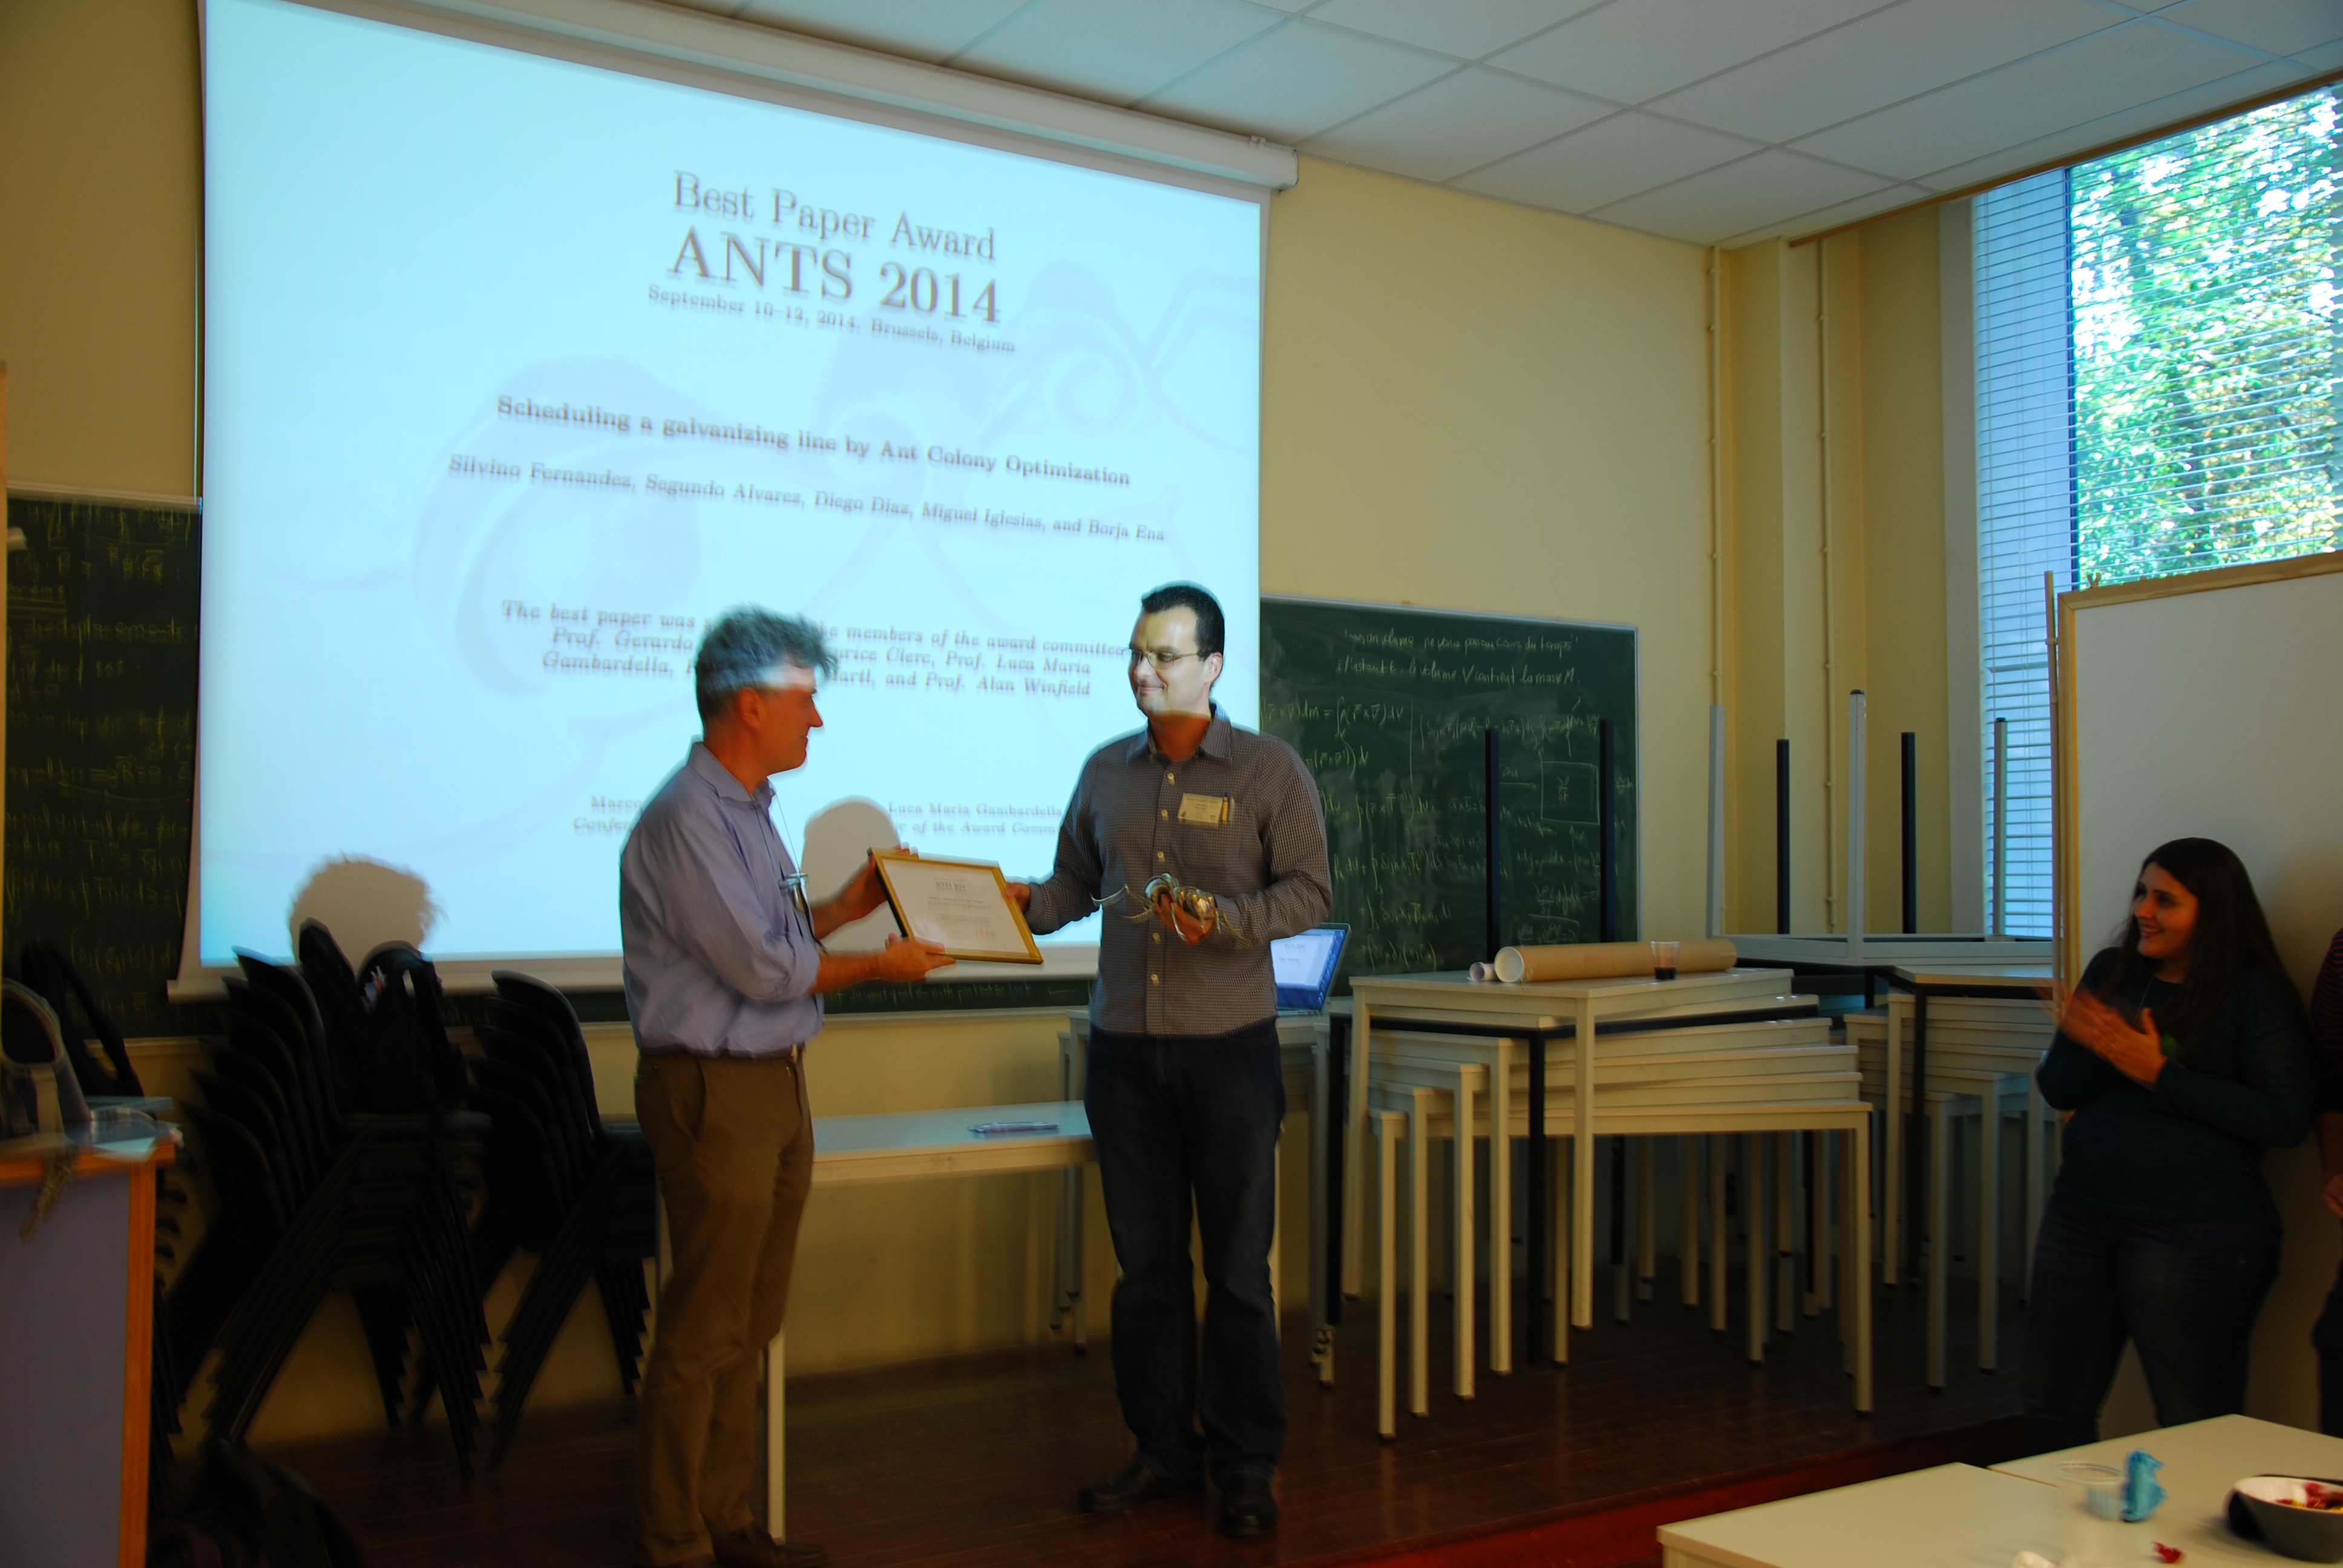 ANTS 2014 Best Paper Award